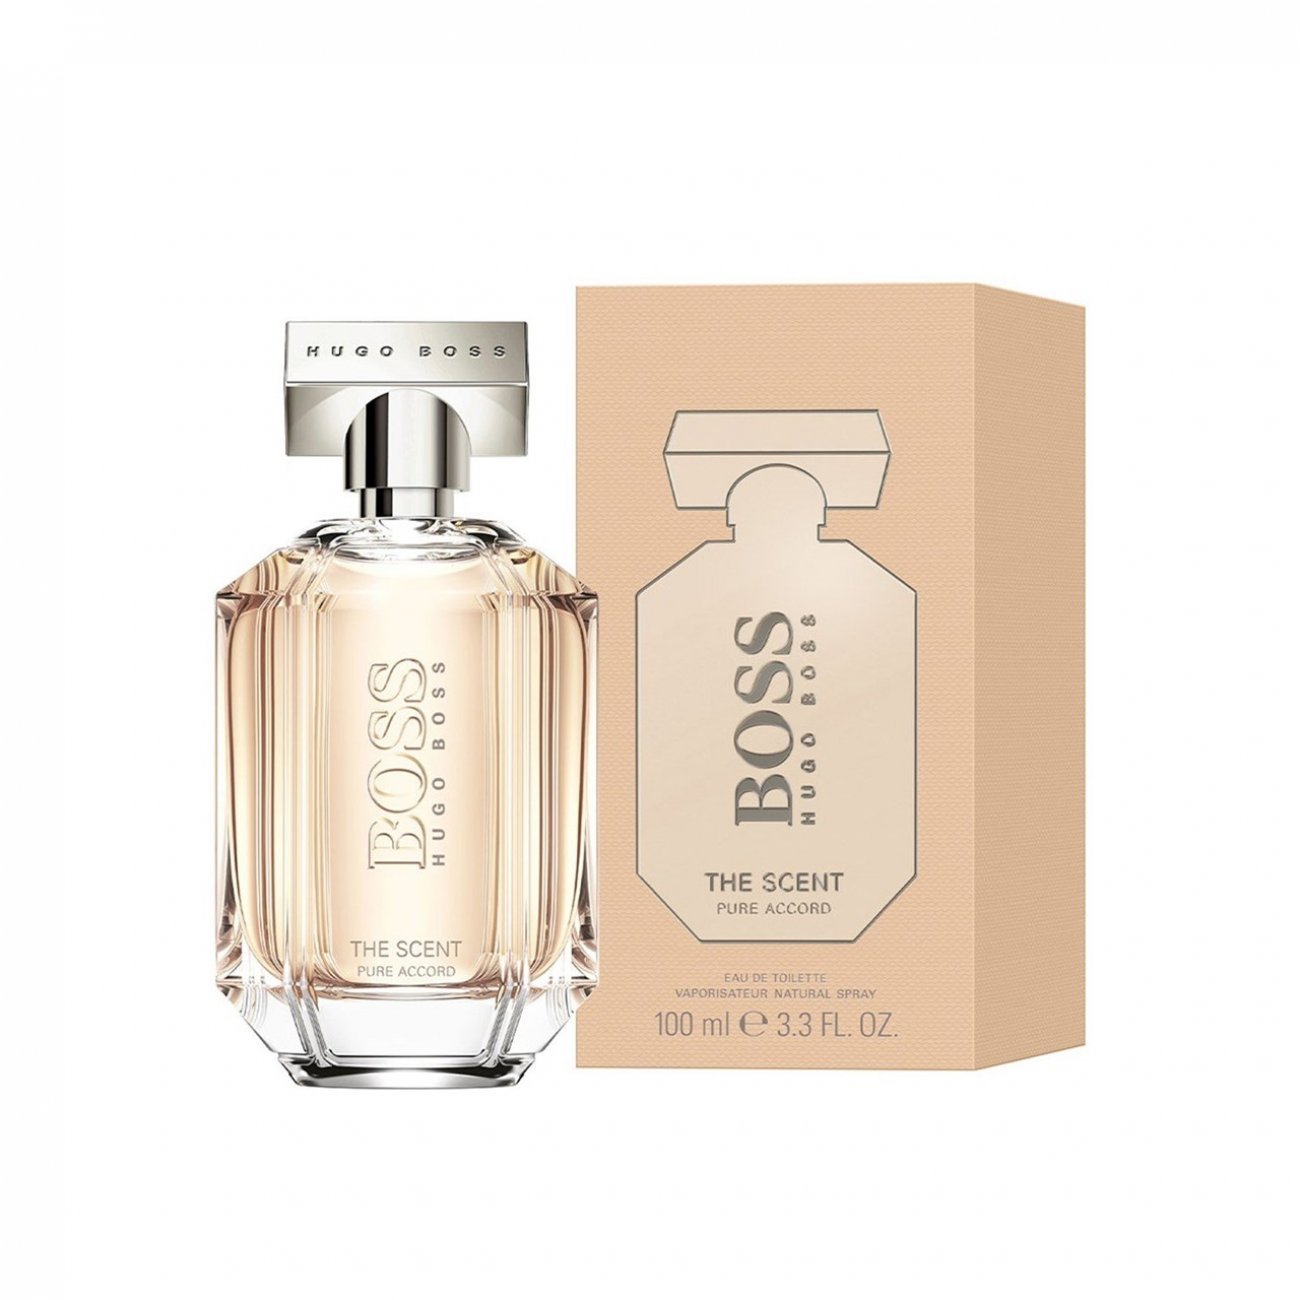 Hugo Boss The Scent Perfume Review | lupon.gov.ph